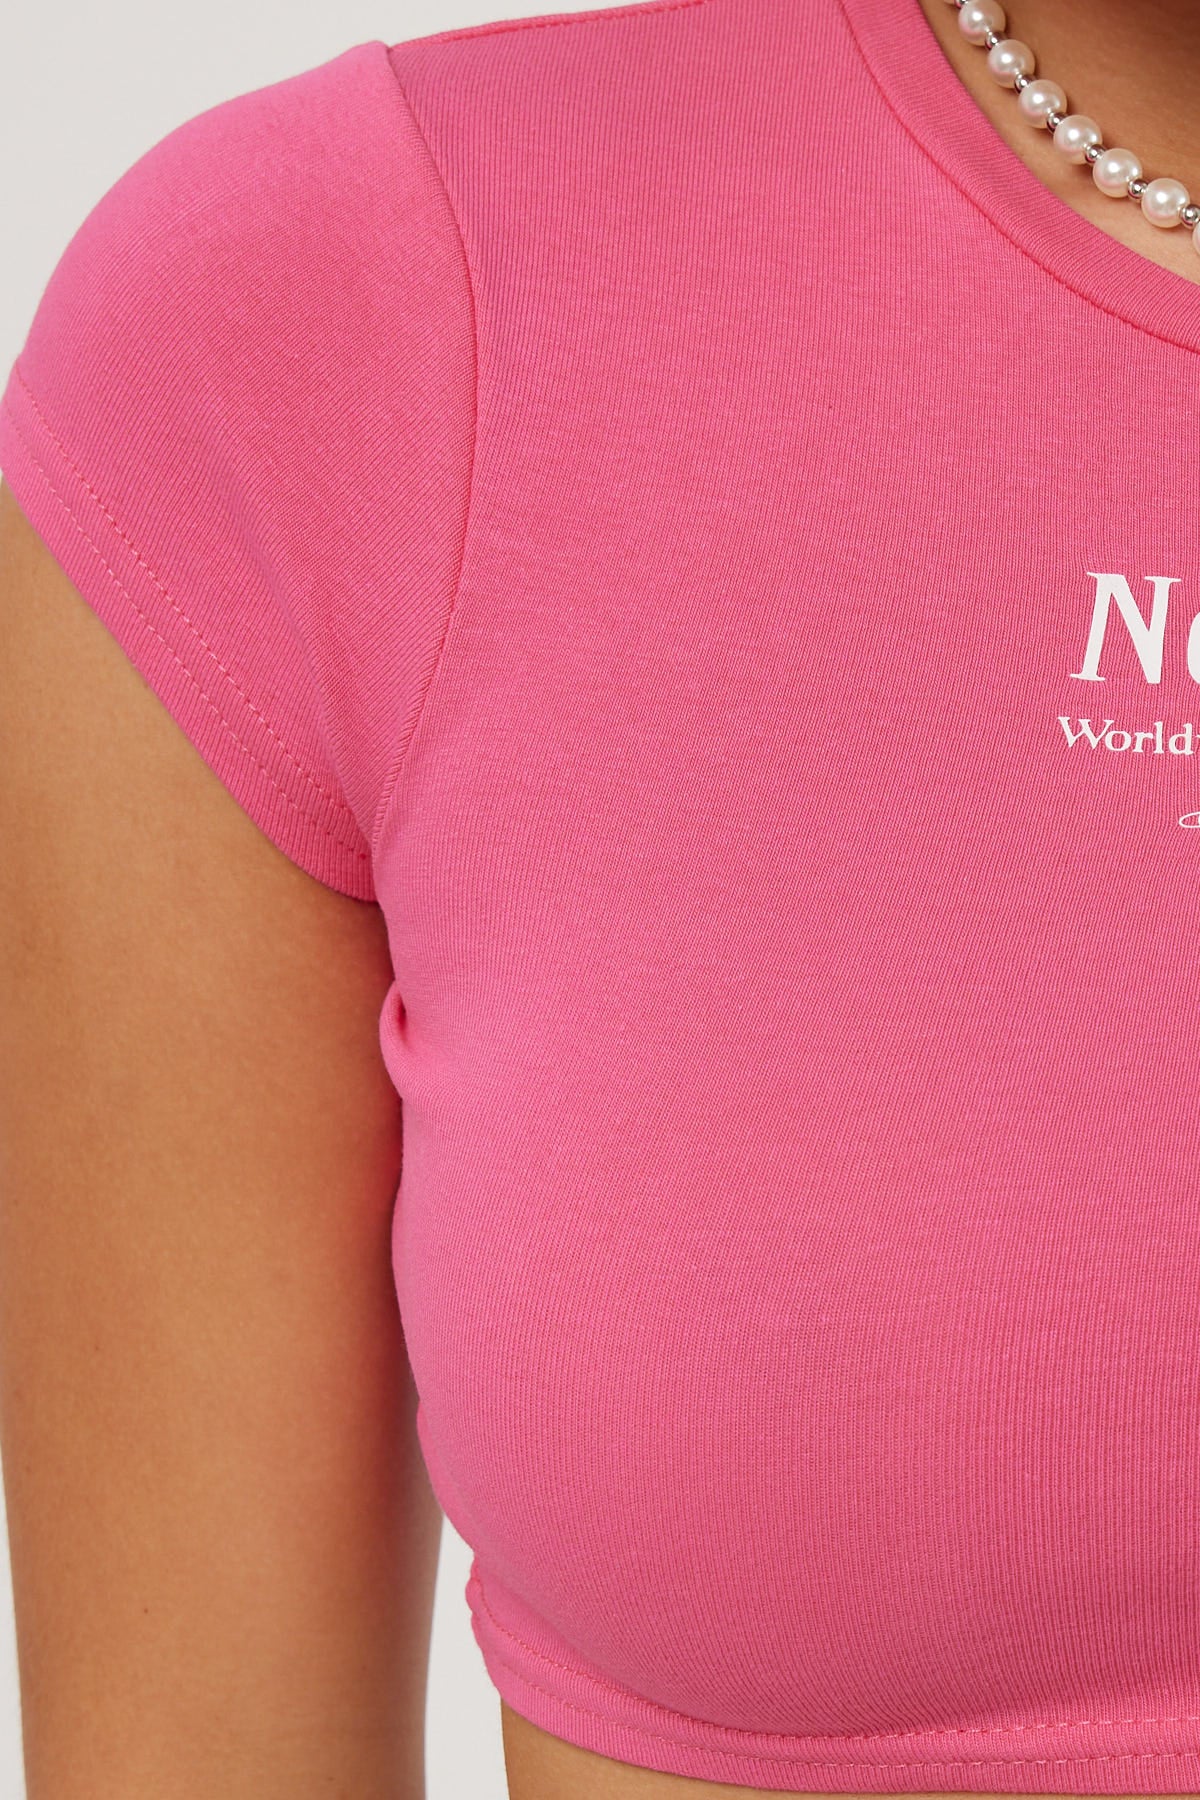 Neovision Worldwide Cropped Baby Tee Pink